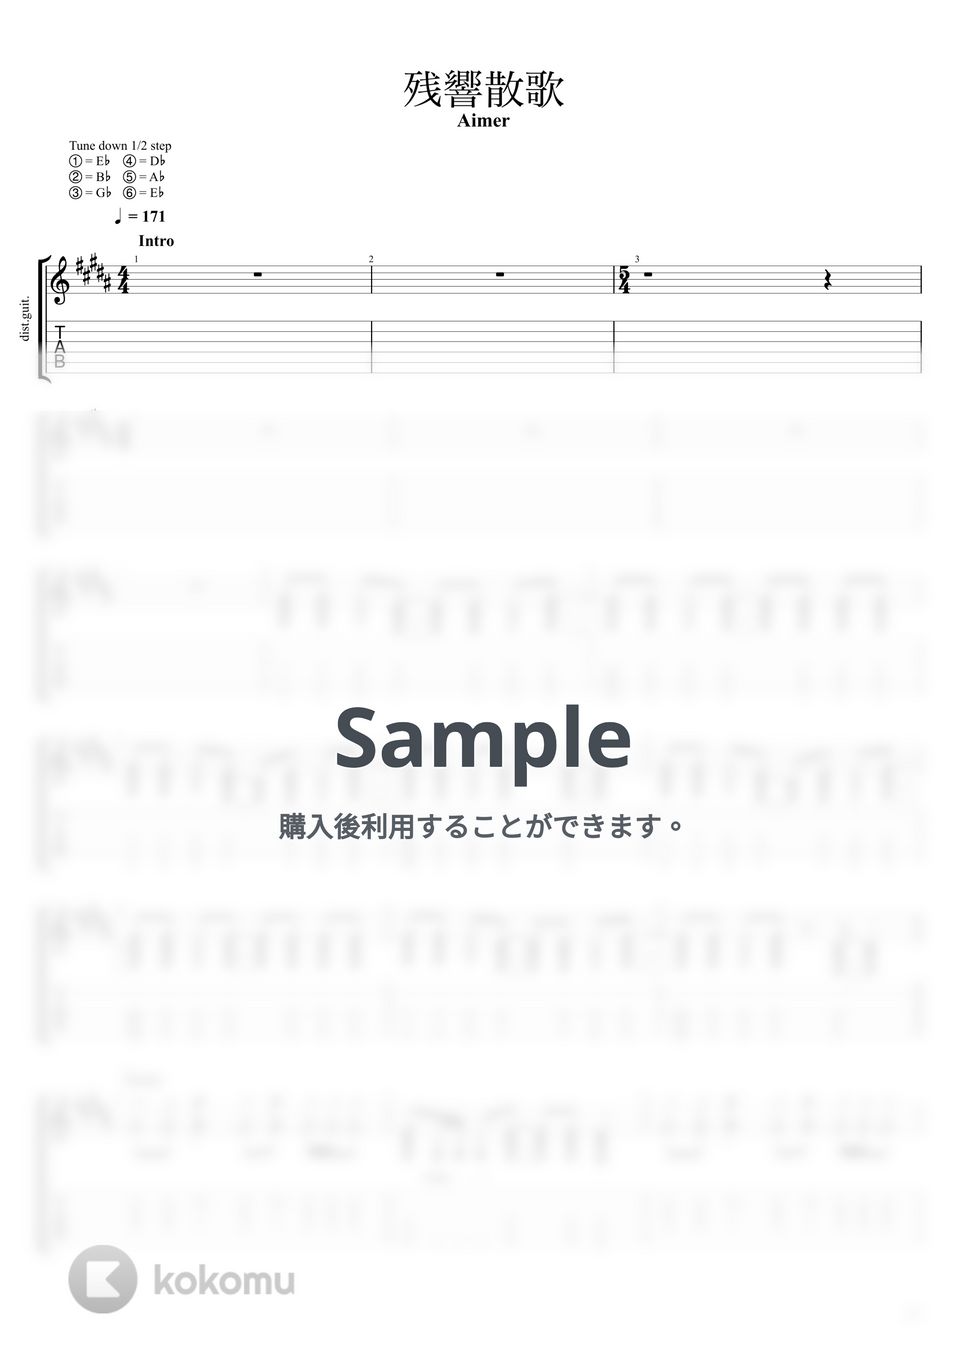 Aimer - 残響散歌 by Ryo Higuchi